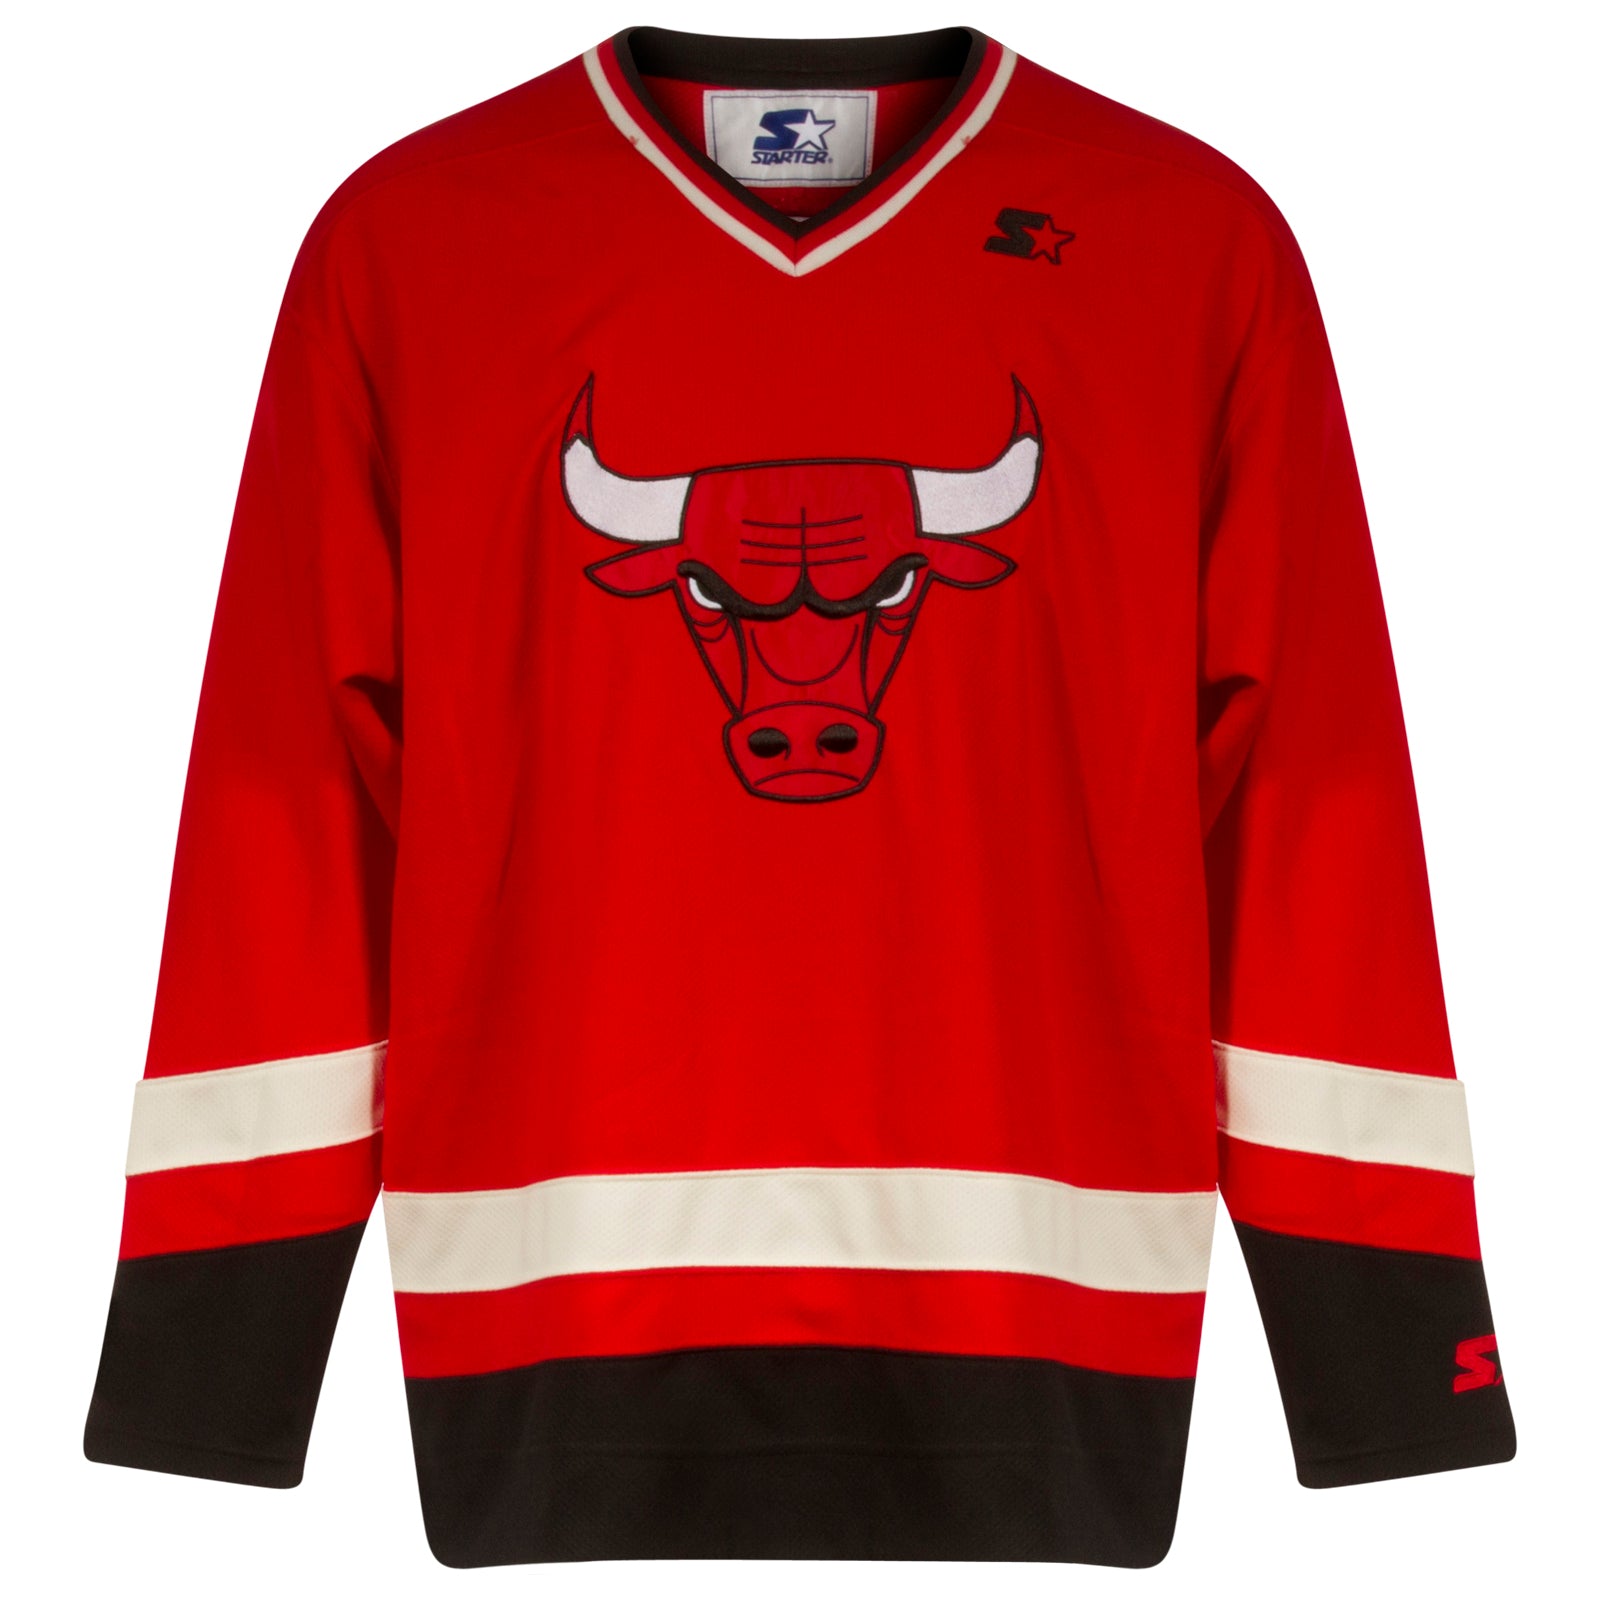 red bull hockey jersey